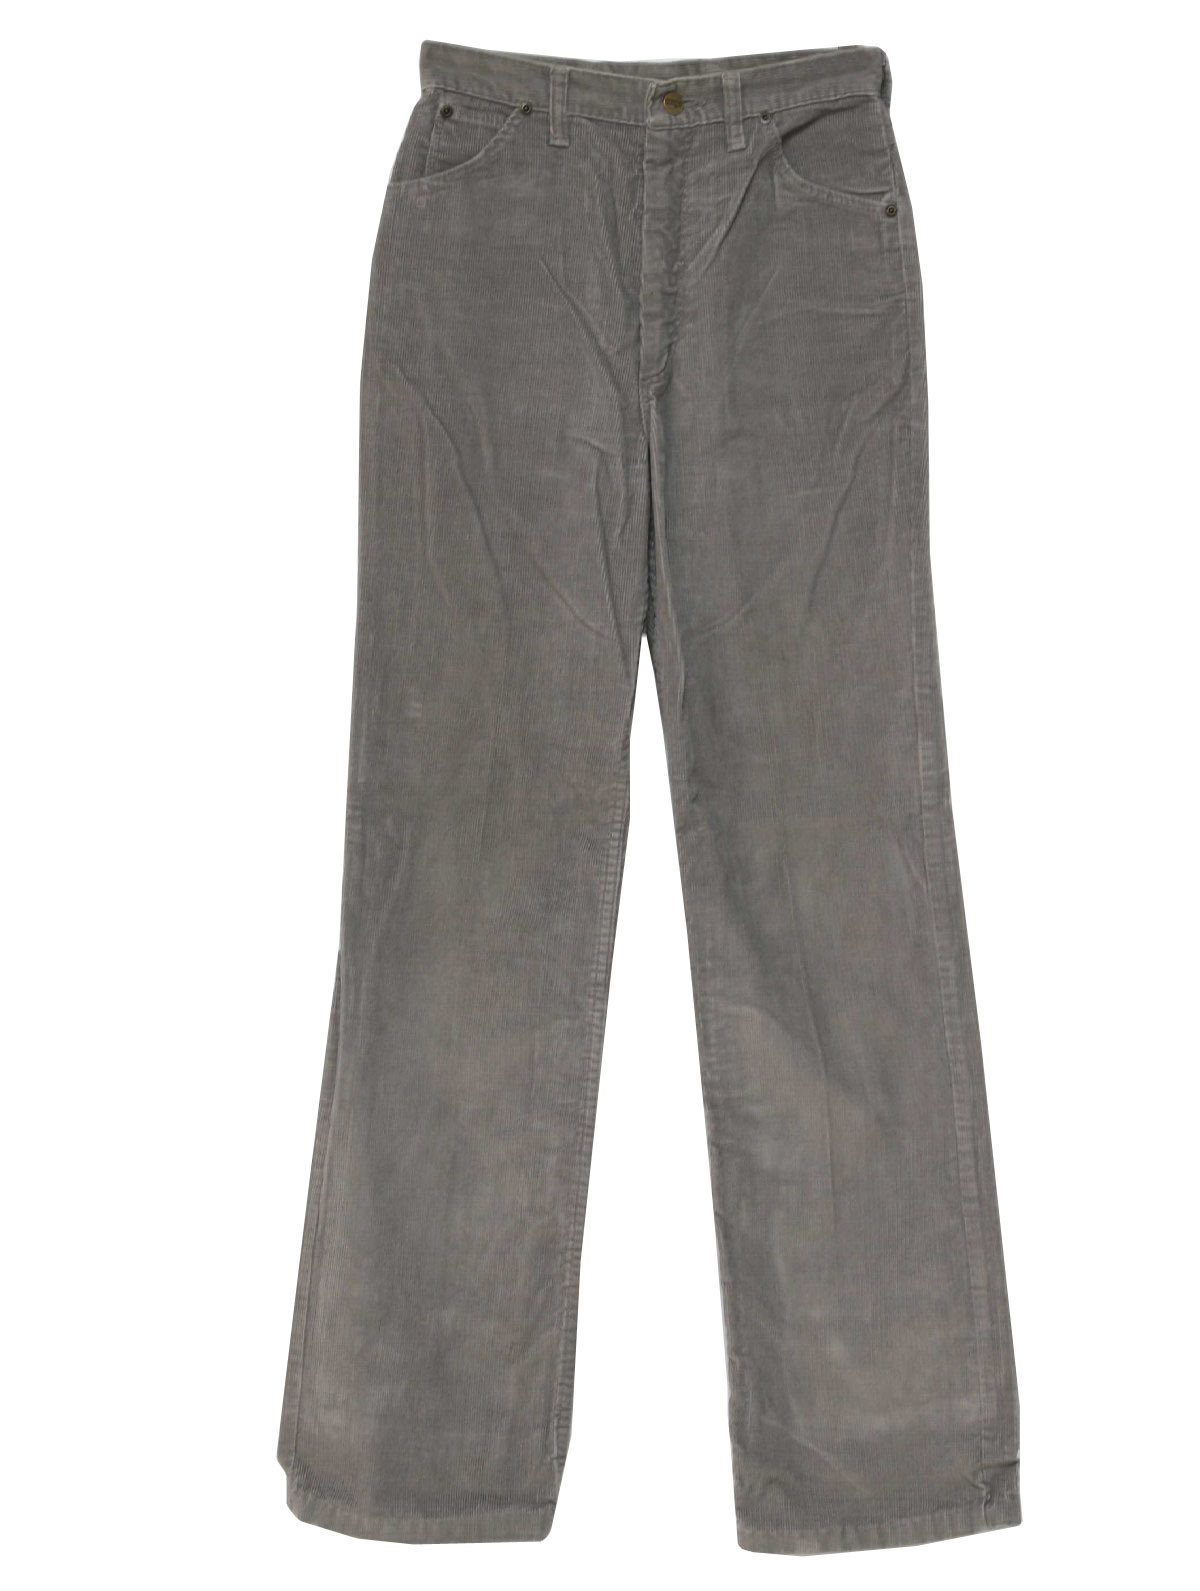 Retro 80s Pants (Wrangler) : 80s -Wrangler- Mens grey cotton corduroy ...